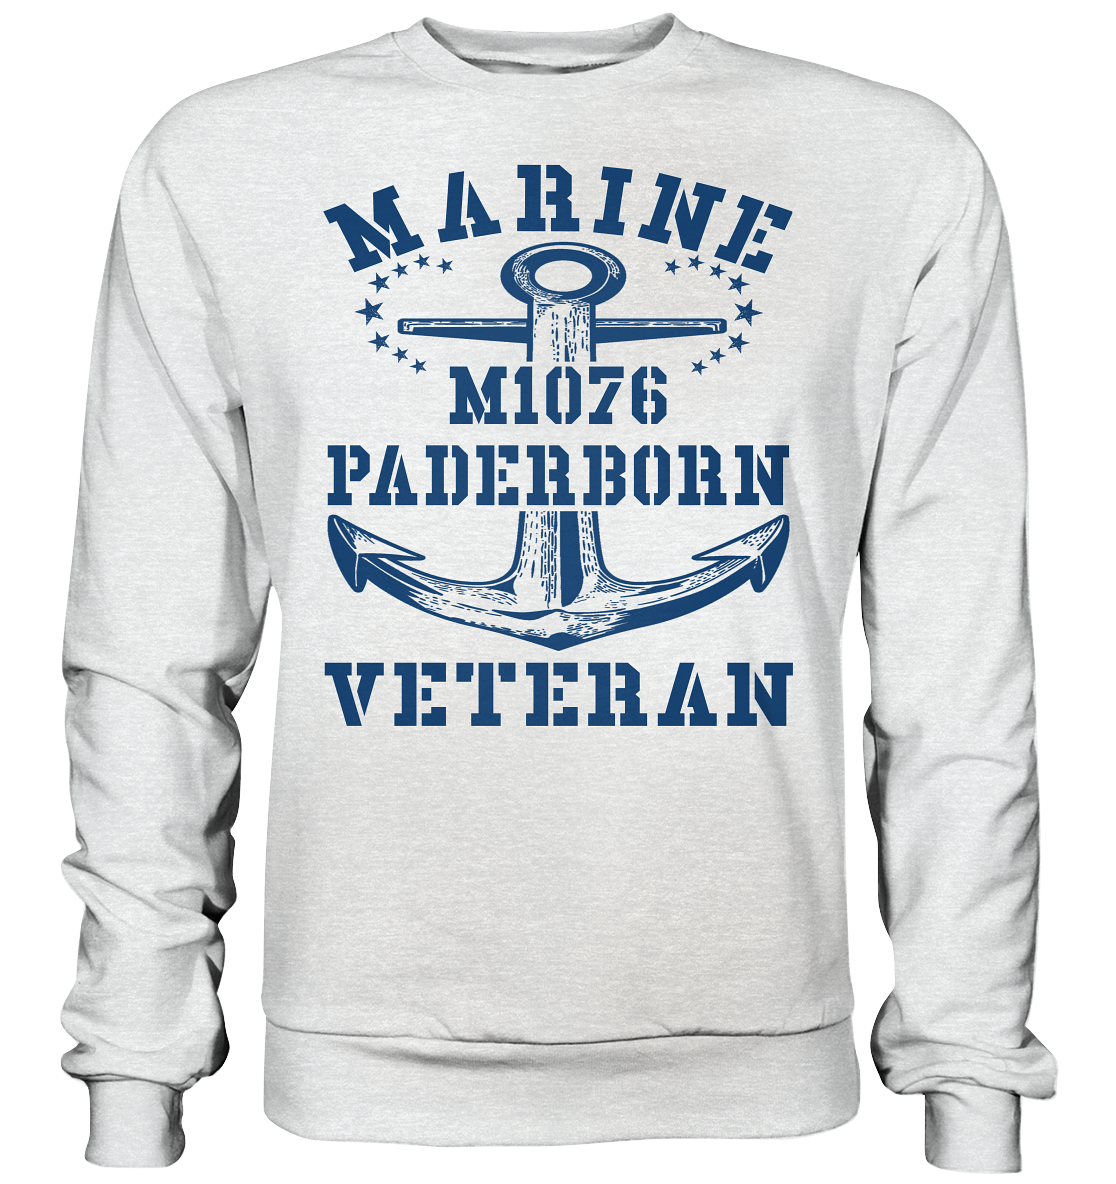 MARINE VETERAN M1076 PADERBORN - Premium Sweatshirt